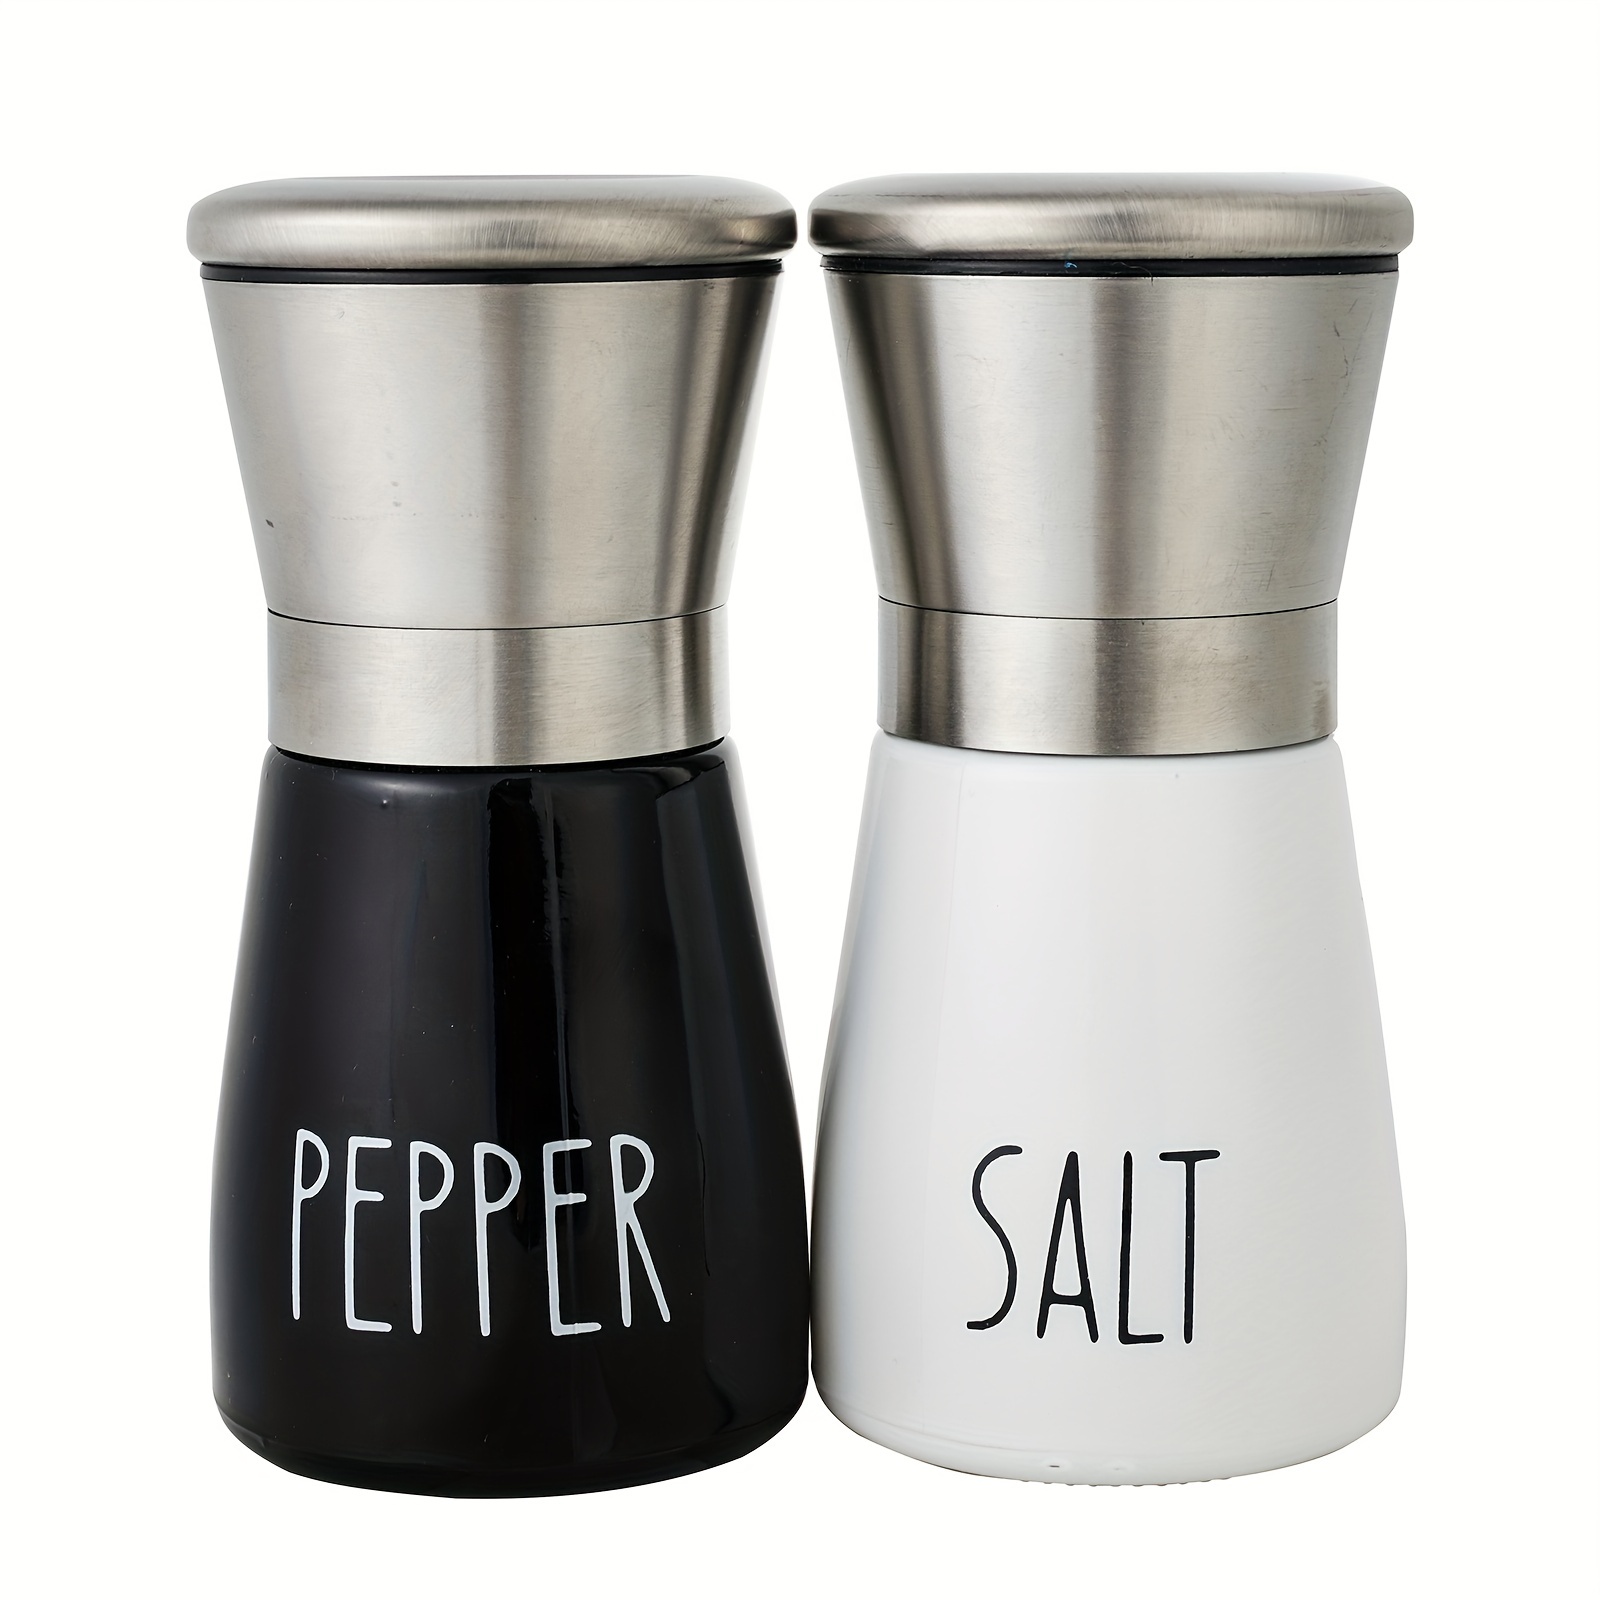 Salt and Pepper Grinder Set,Stainless Steel Manual Salt and Pepper